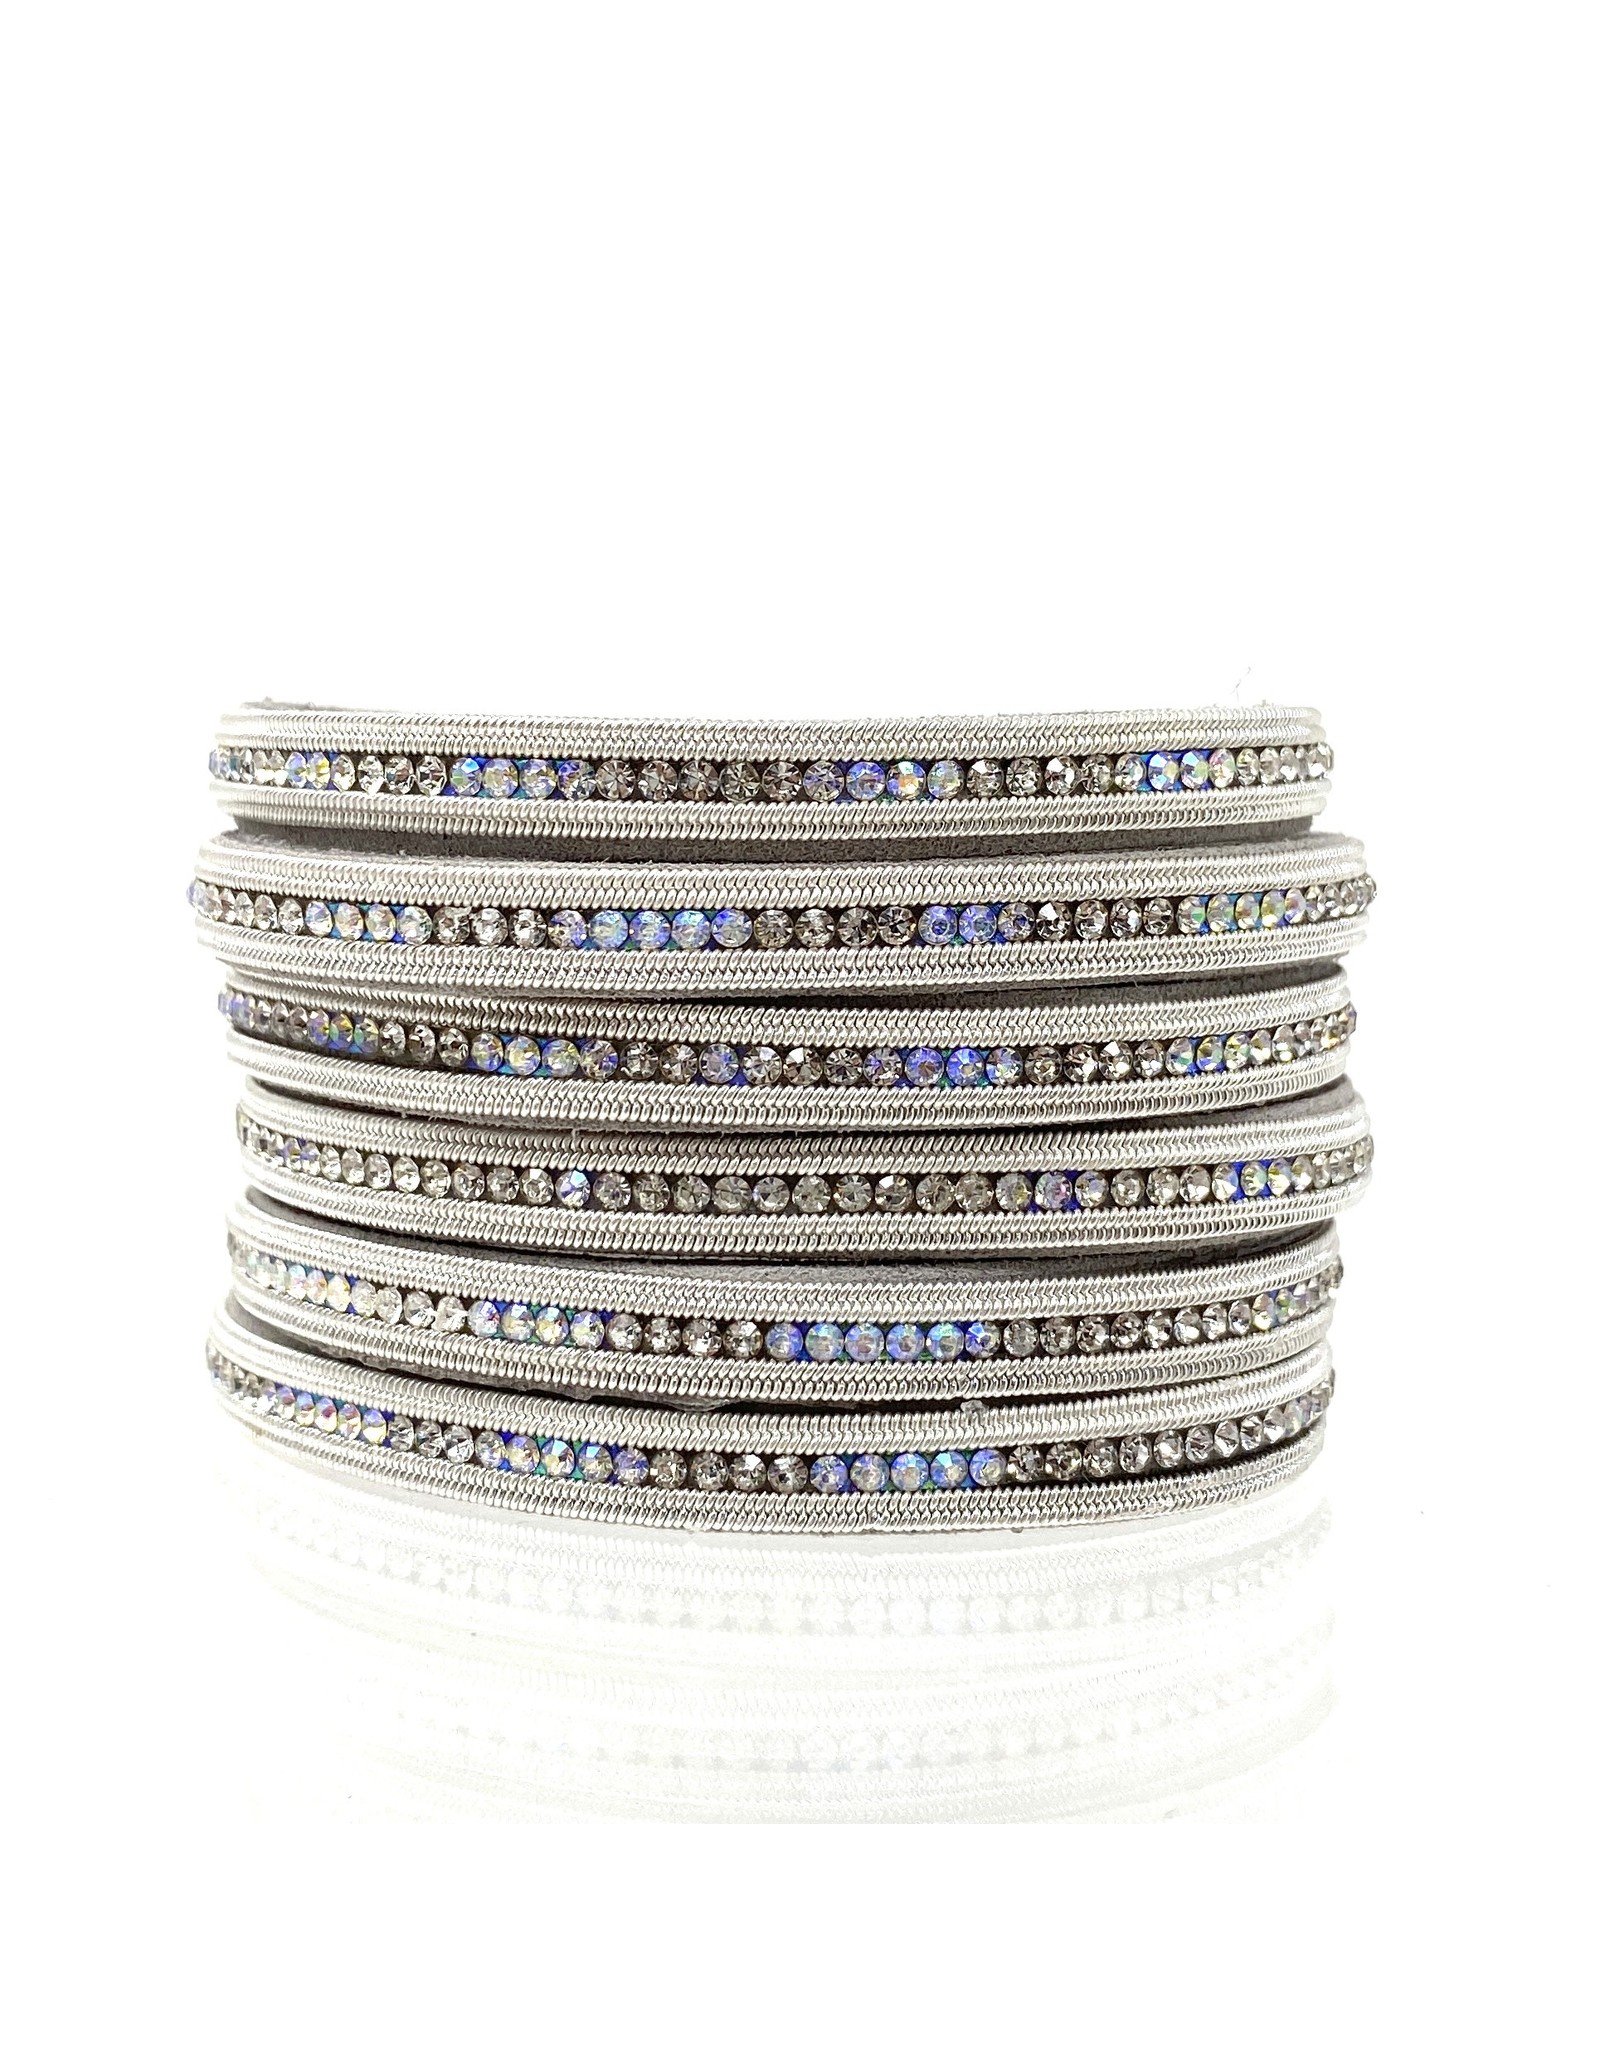 Sunrise USA Trading X-Wide Crystal Bracelet Silver